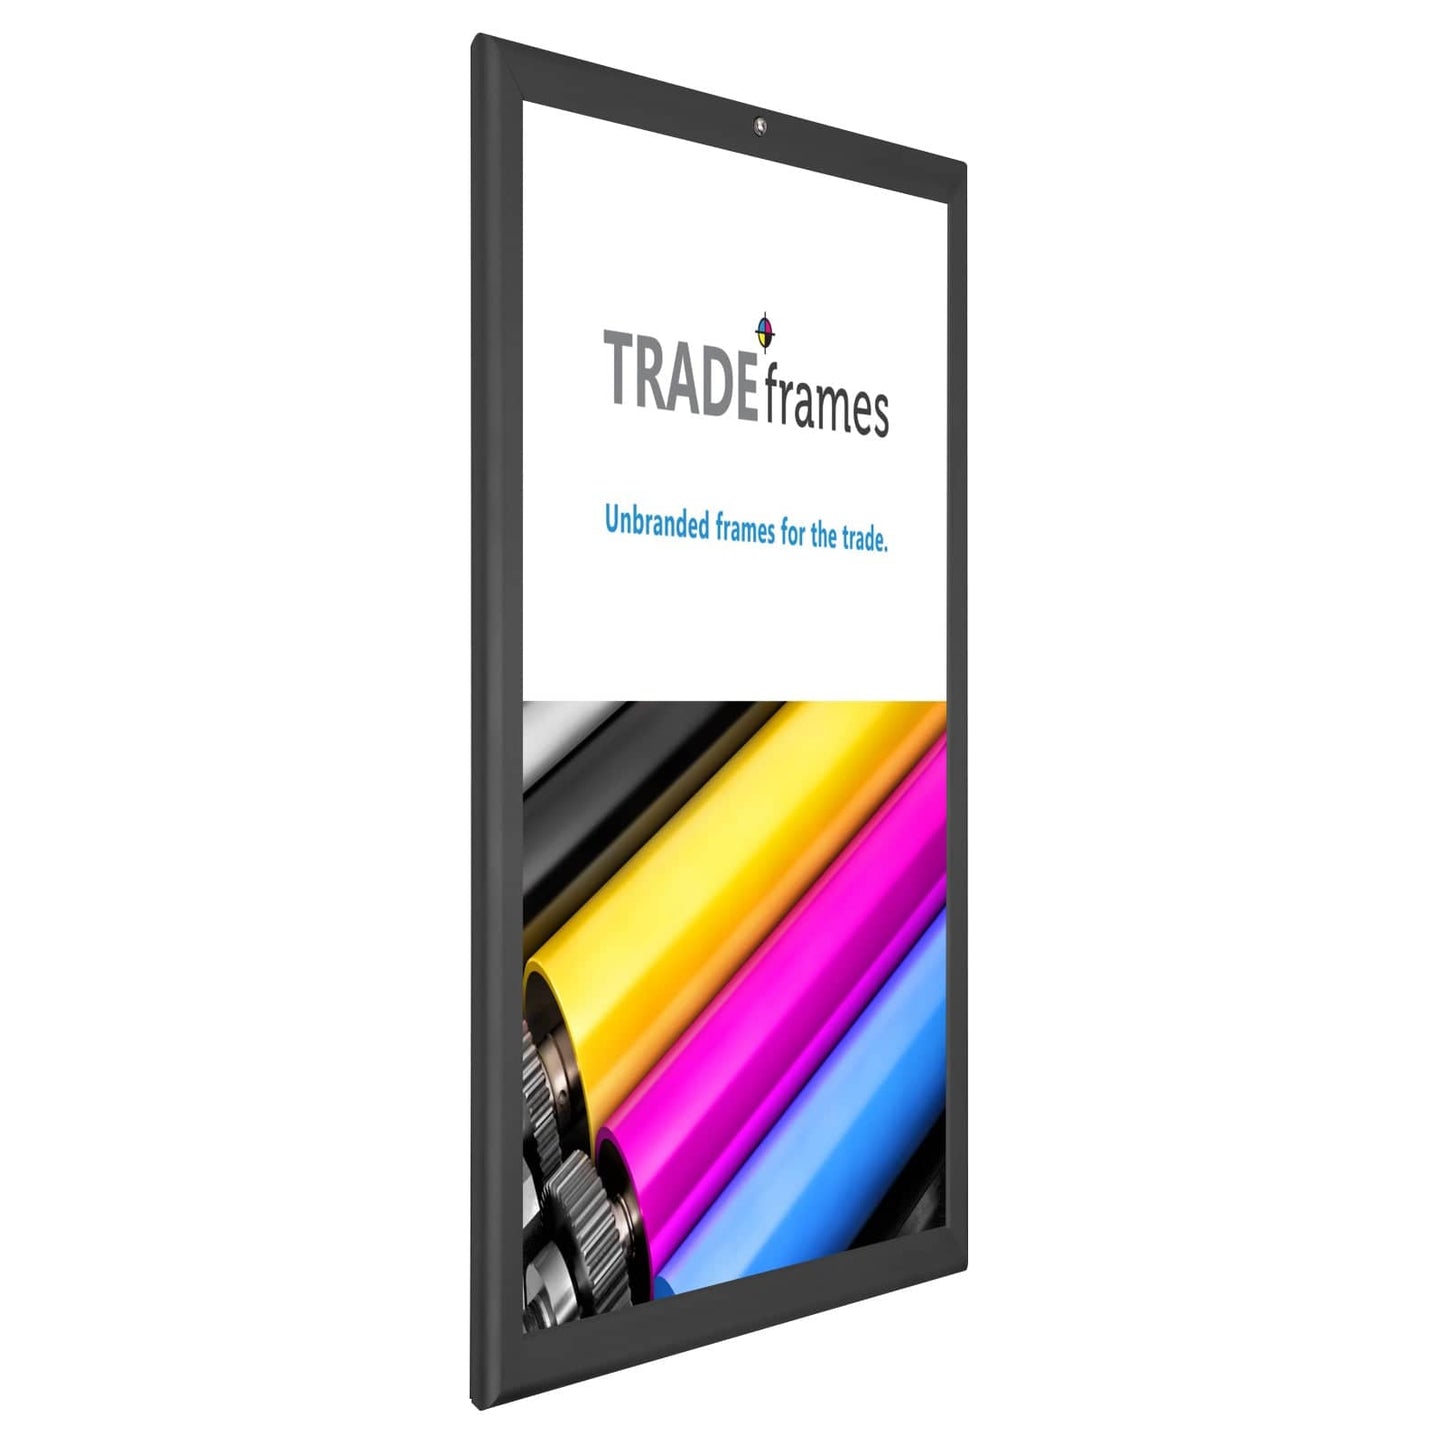 18x24 Black TRADEframe Locking - 1.25" Profile - Snap Frames Direct